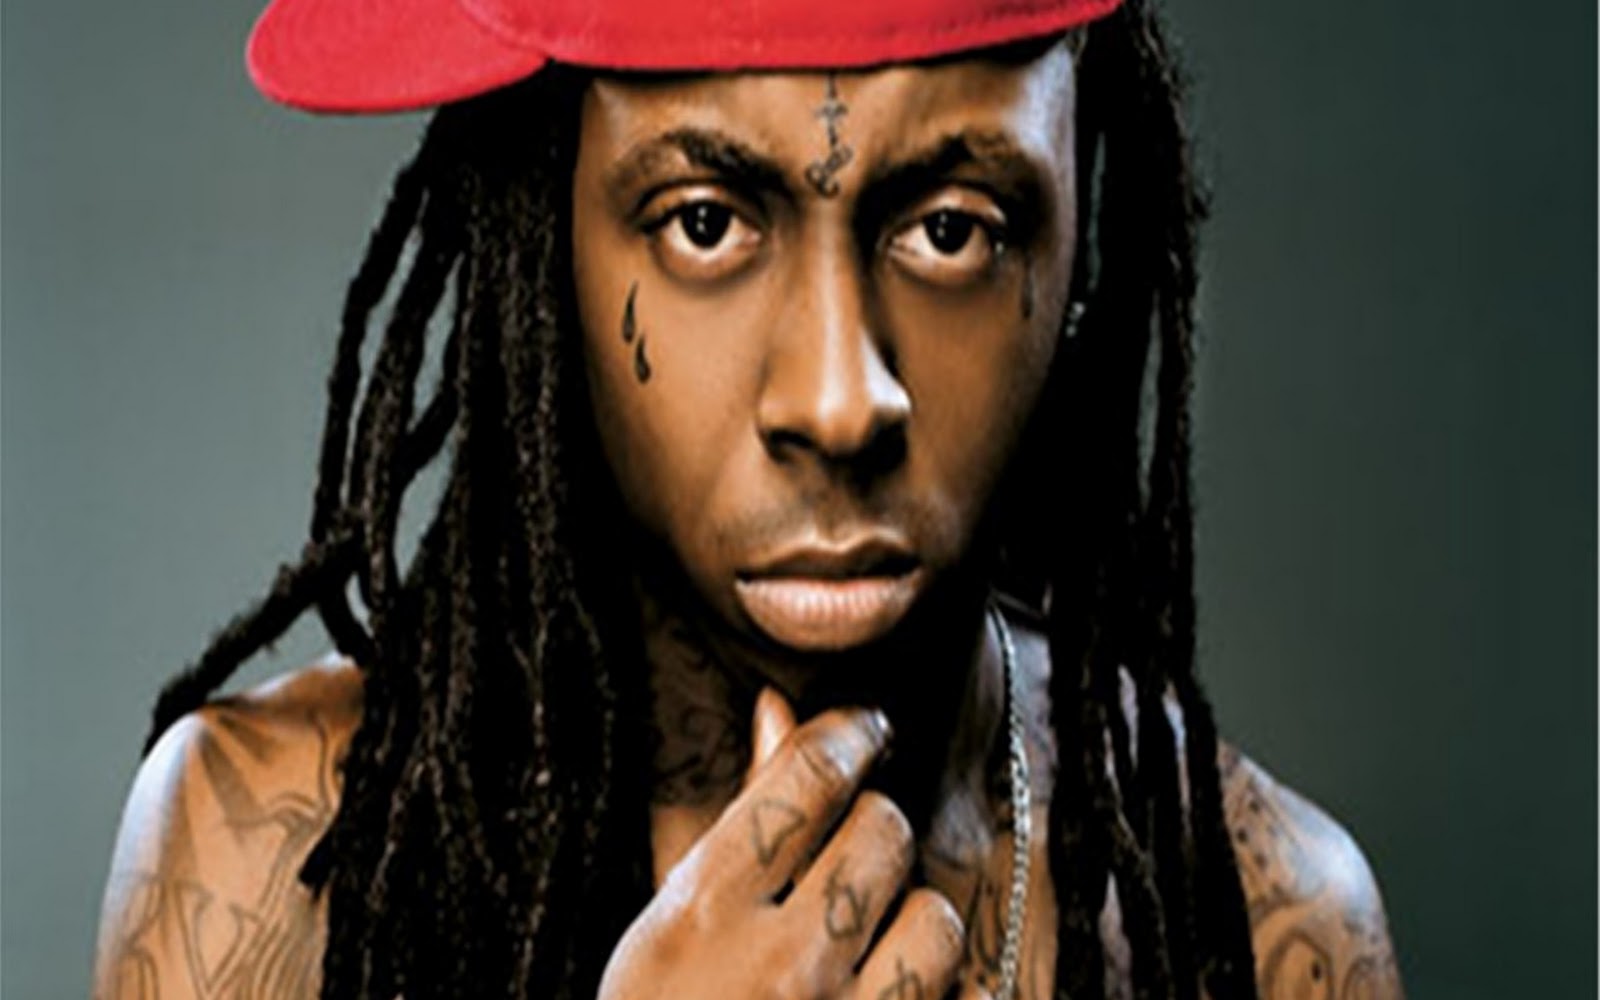 all new pix1: Lil Wayne Wallpaper For Facebook